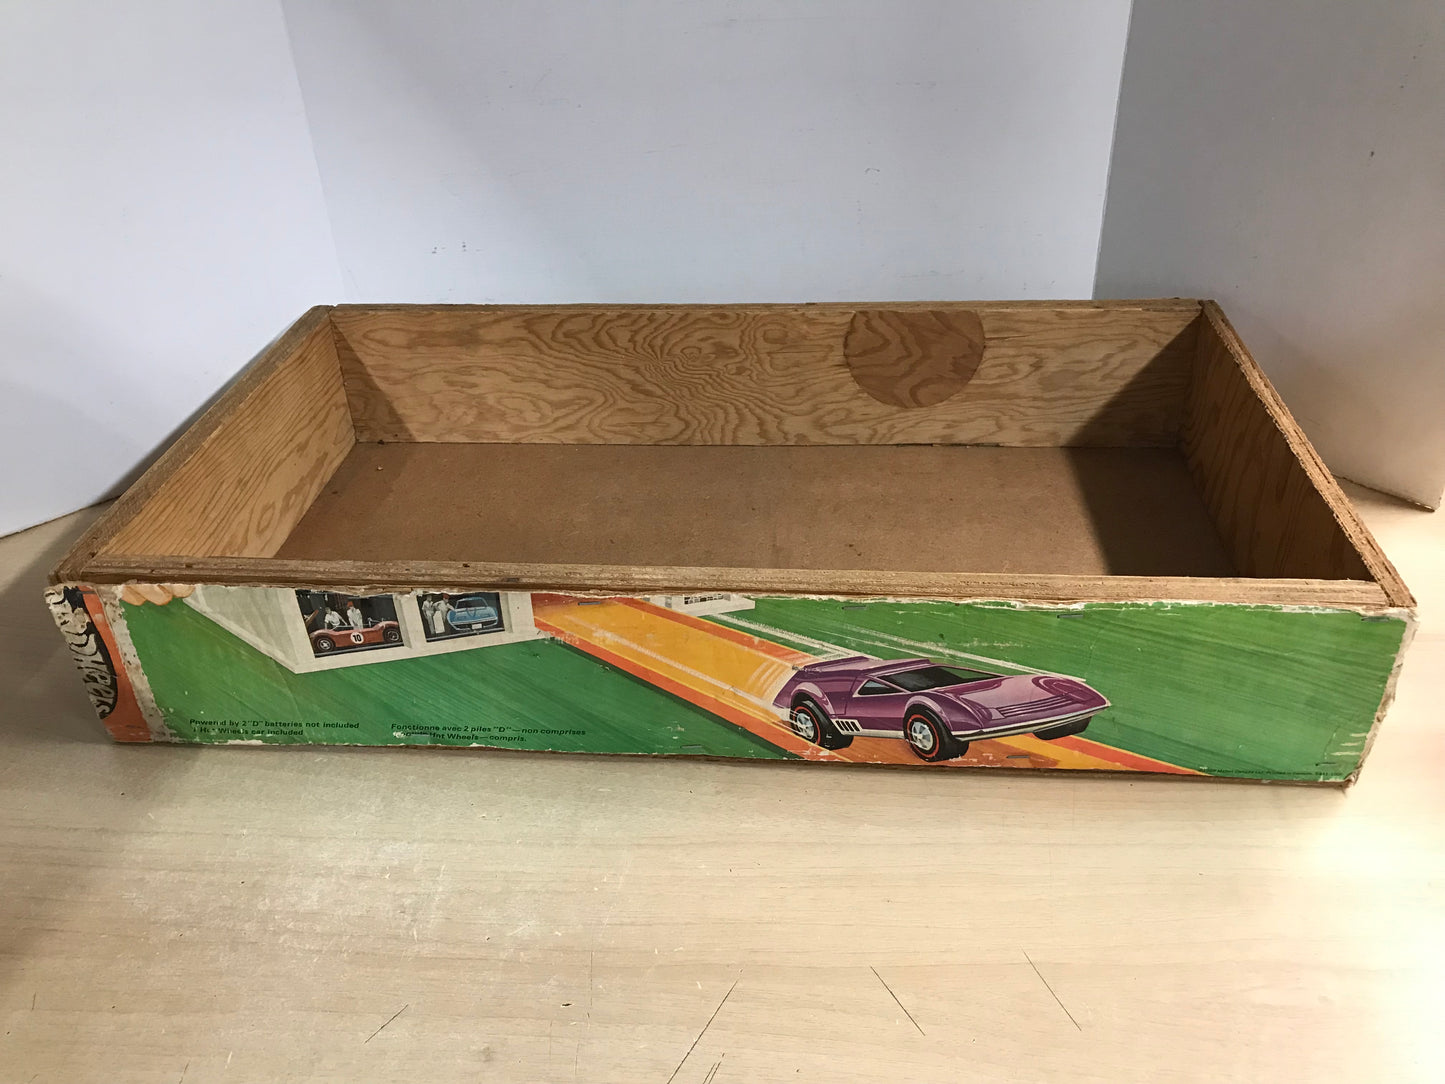 1969 Mattel Hot wheels Super Charger Sizzlers Race Set With Original Wood Box All Original Parts RARE